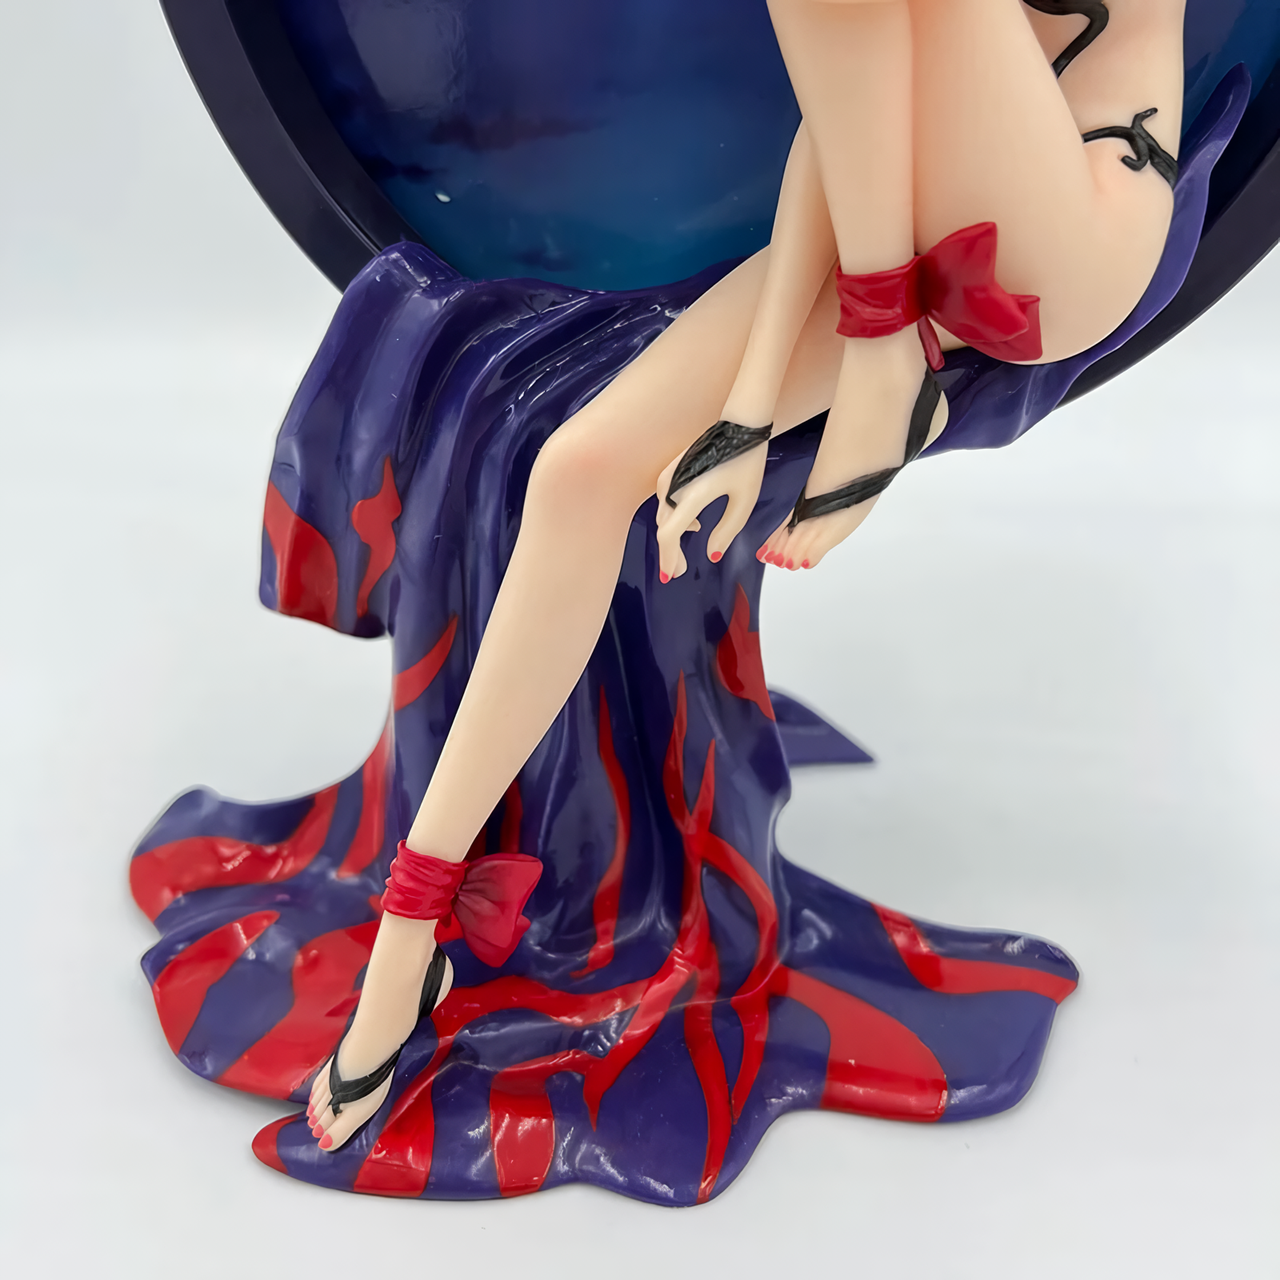 Shuten-douji - Fate / Grand Order 23CM | PVC Figurine | 3D Painted Model